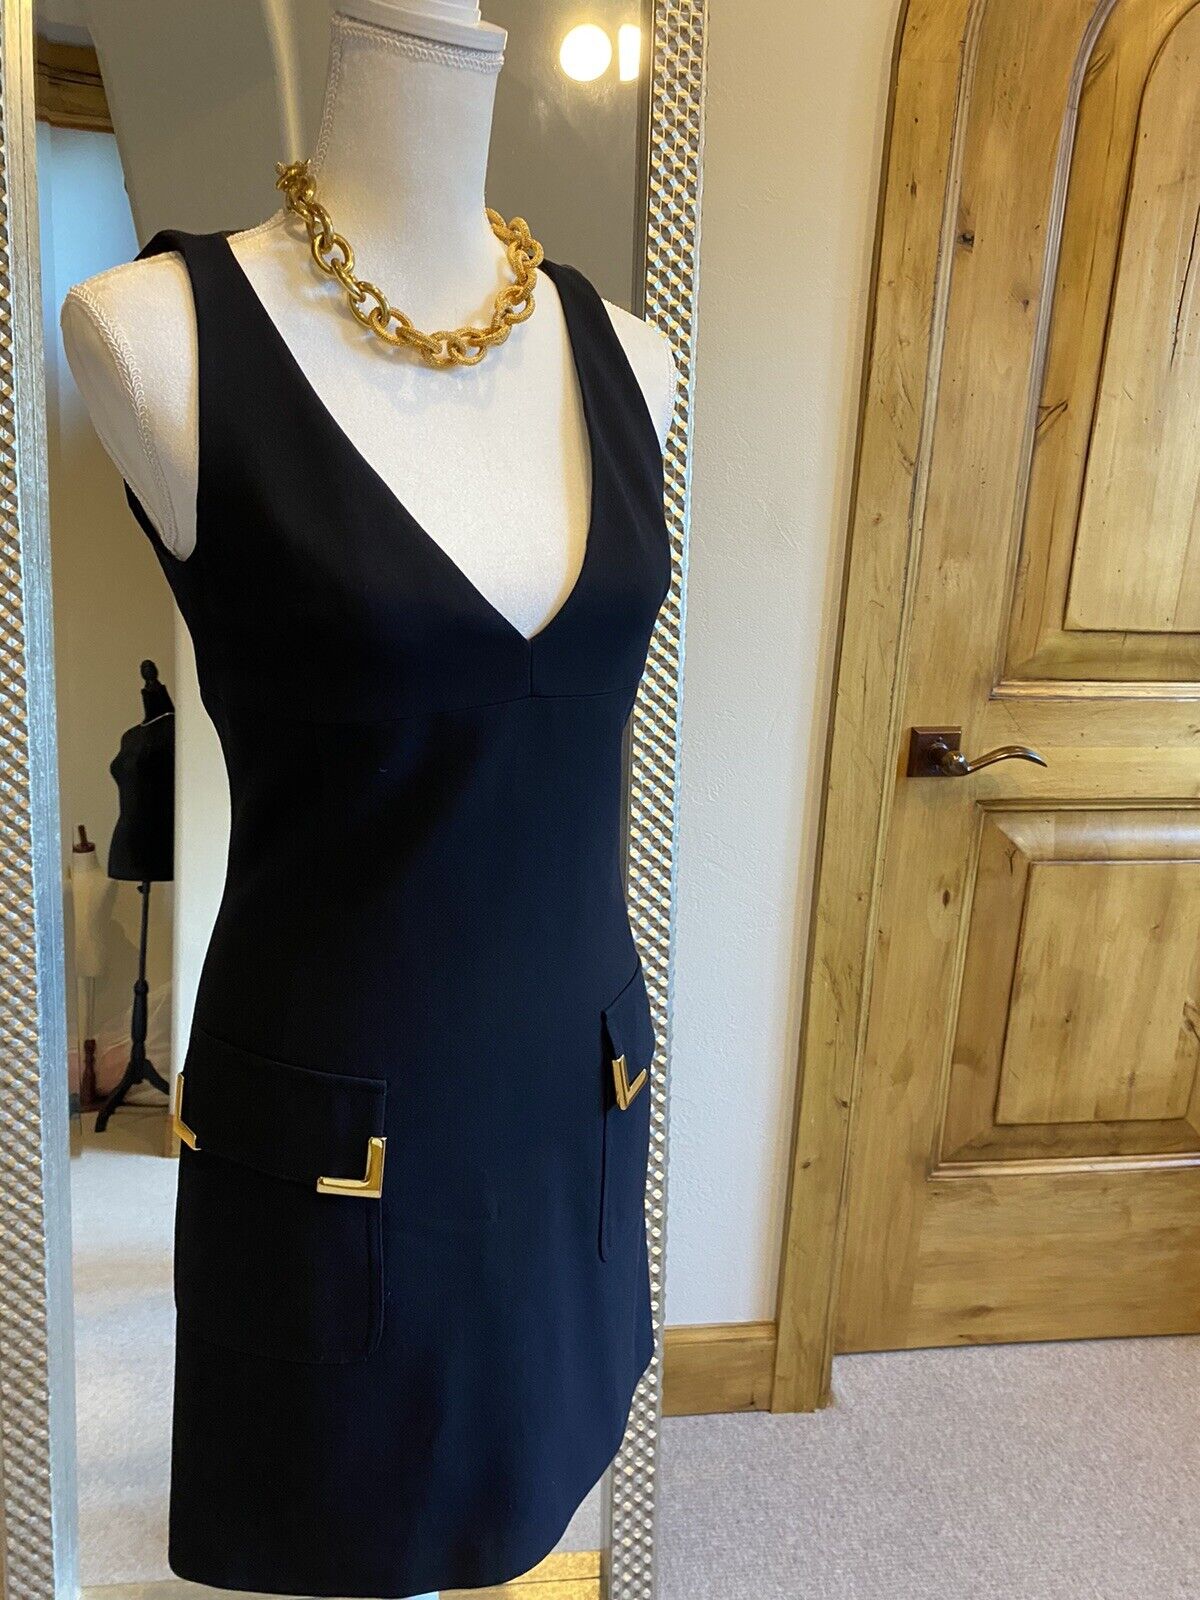 Michael Kors New V-Neck Blue Mini Dress w/Gold Accented Pockets US Size 4 |  eBay